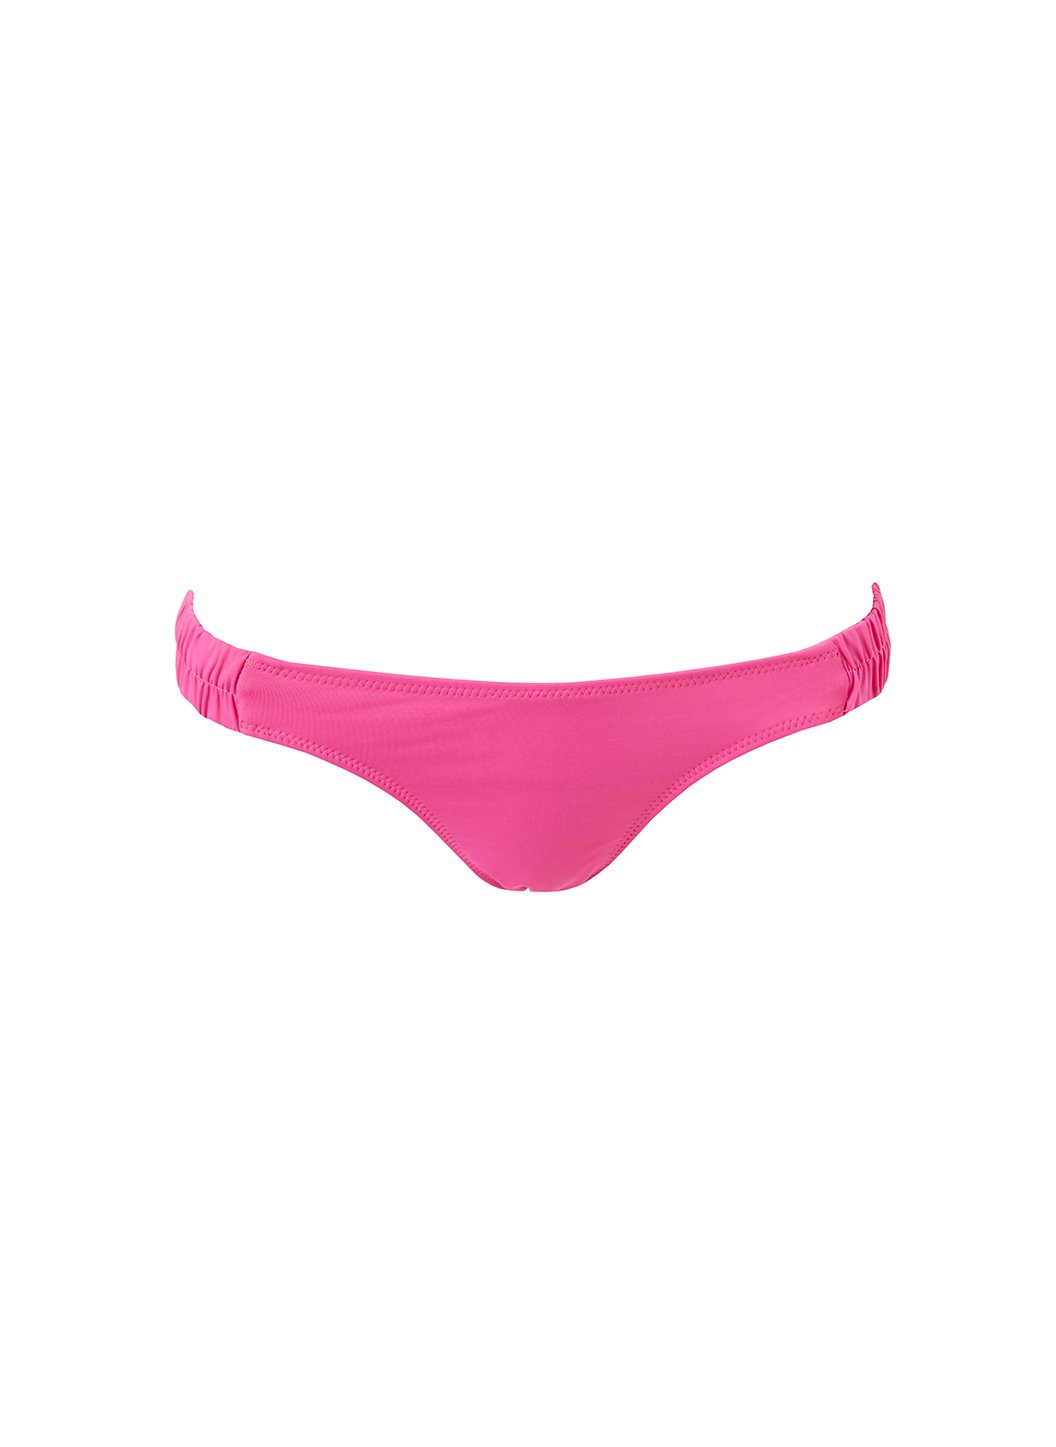 trieste-hot-pink-ruched-bandeau-bikini-bottom